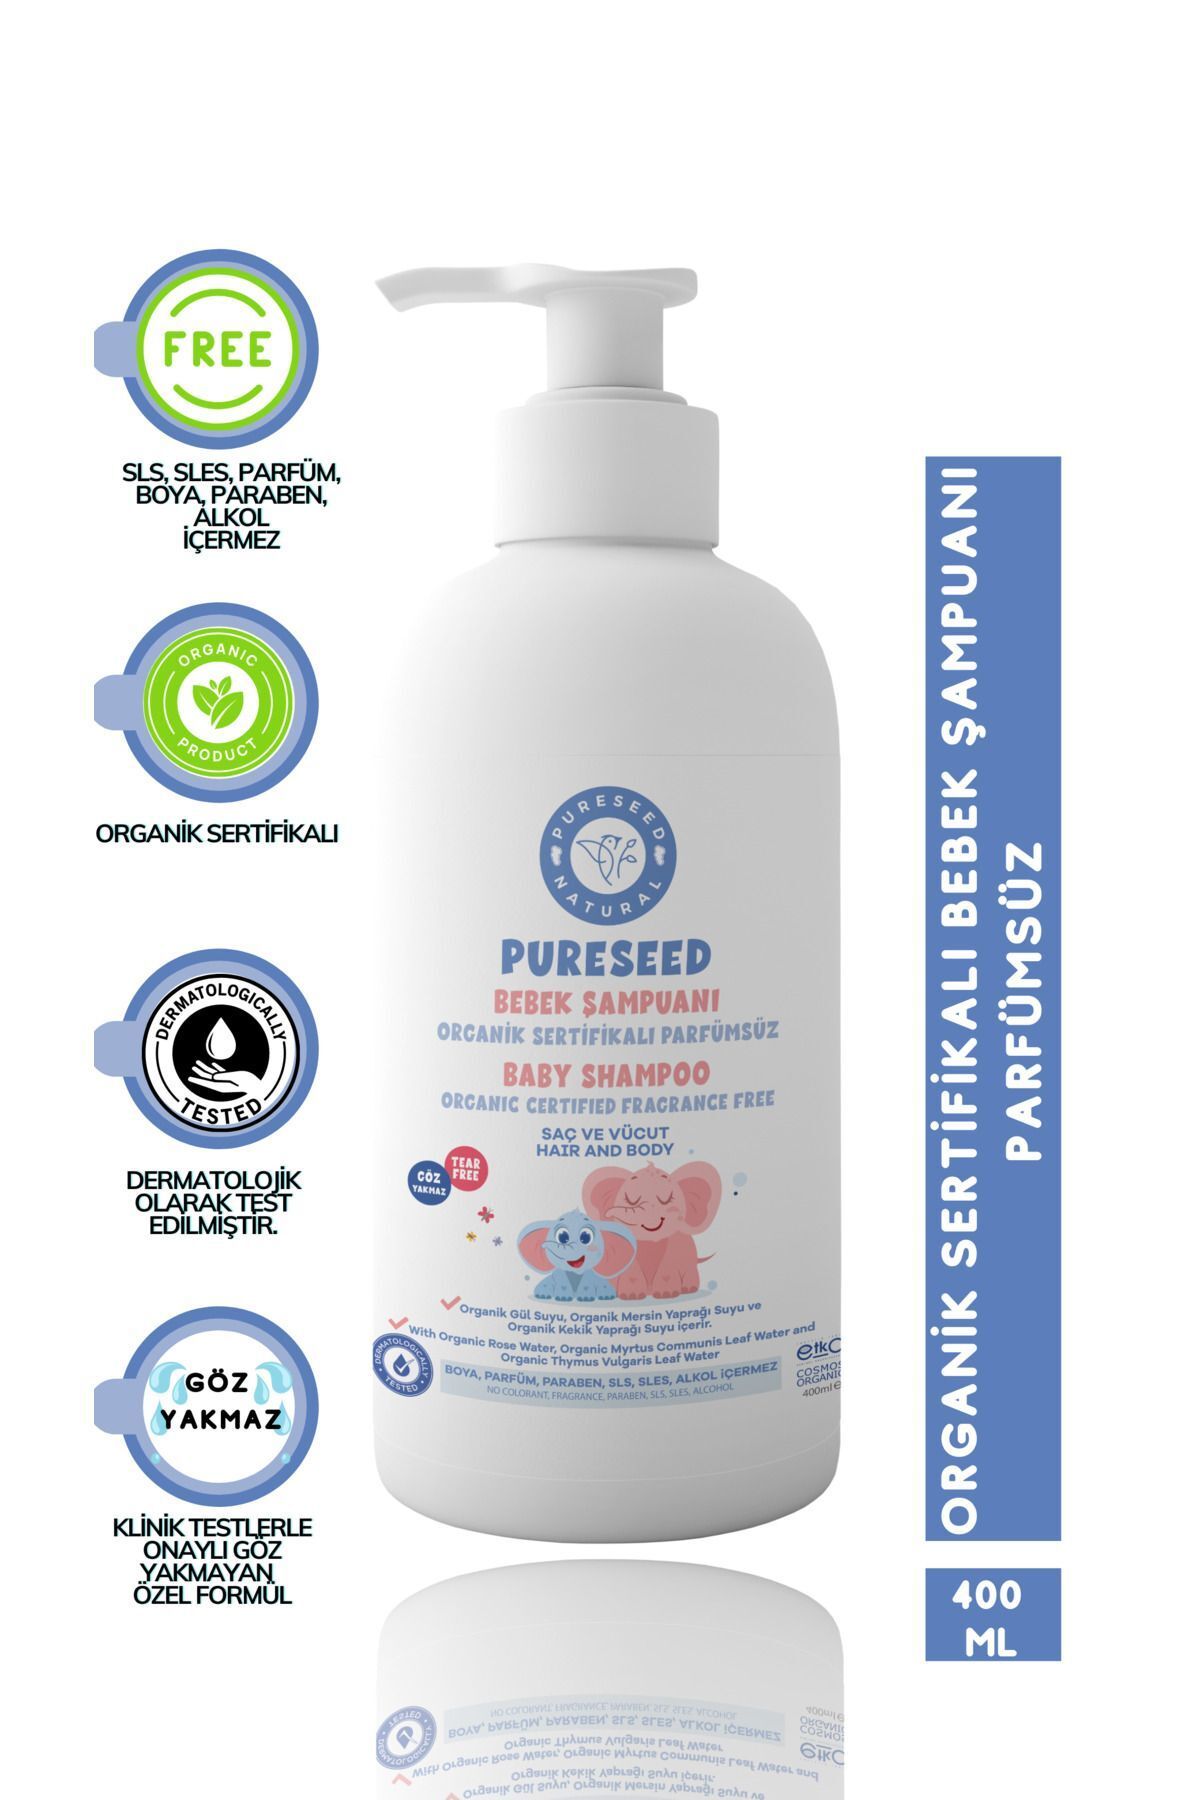 PURESEED NATURAL Organik Sertifikalı Bebek Şampuanı Parfümsüz - 400 ml